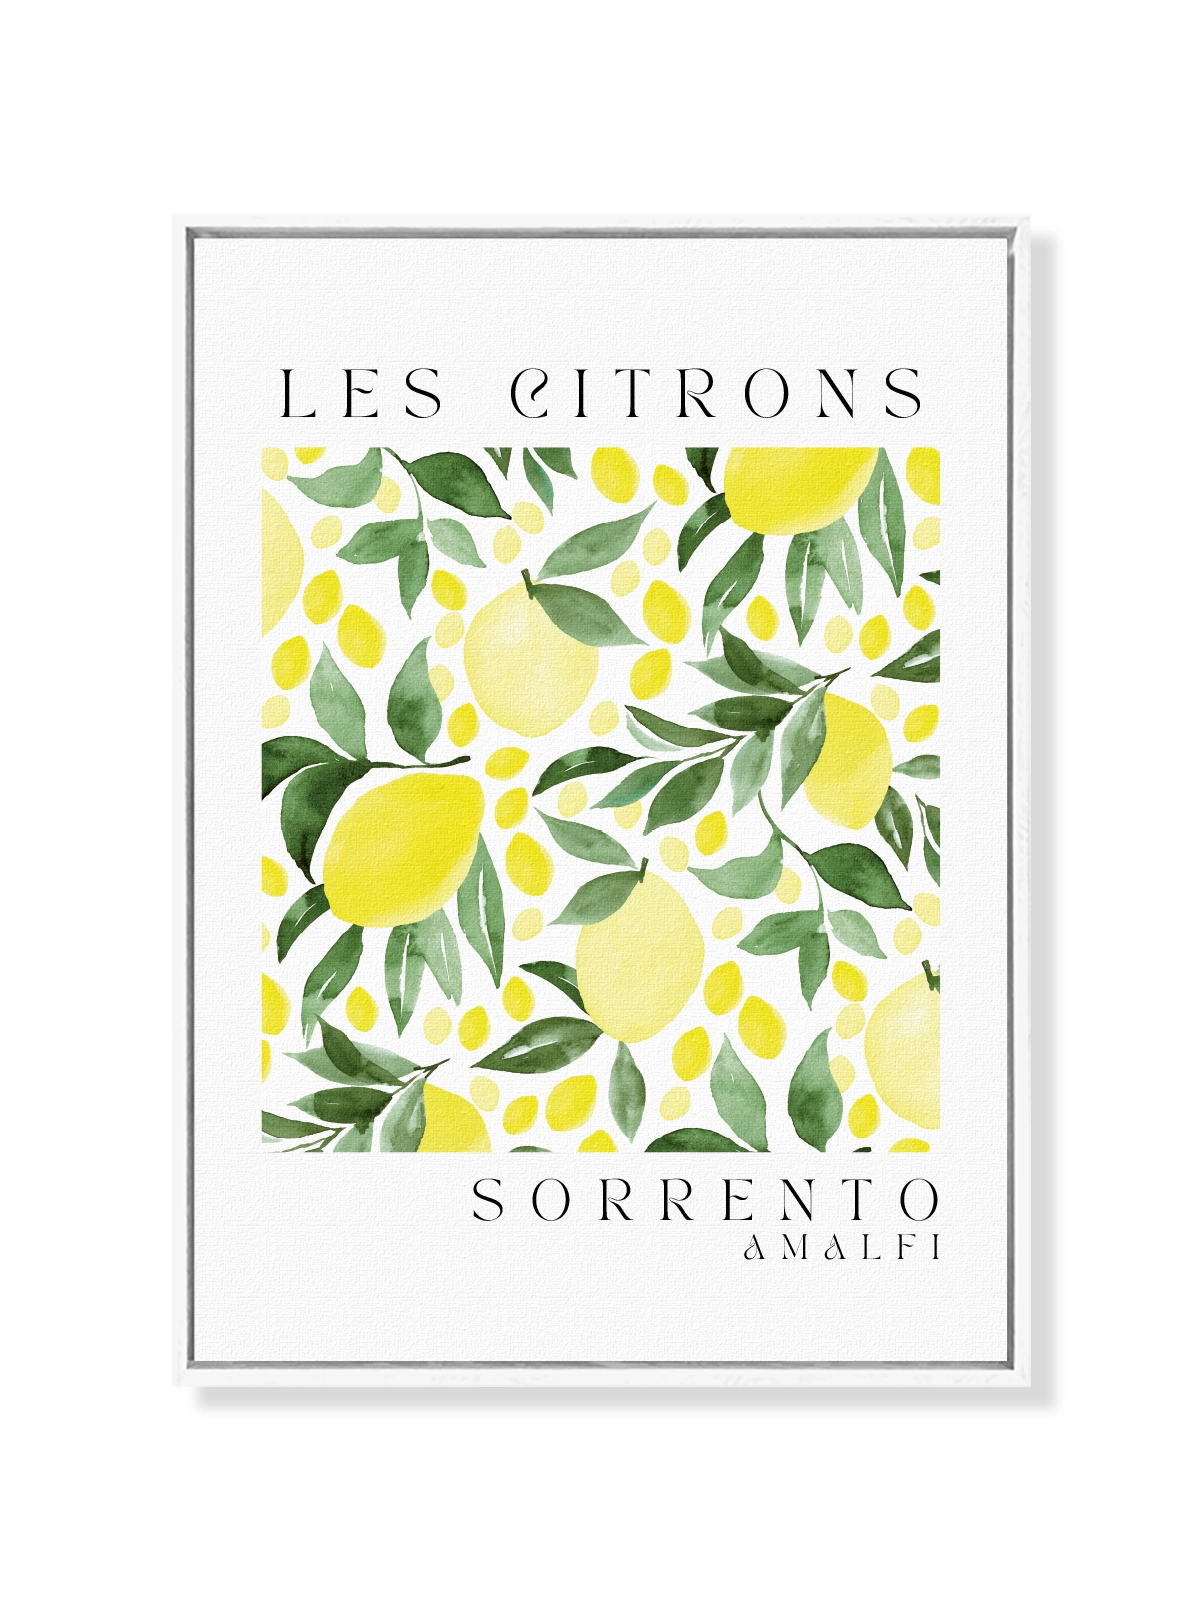 Les Citrons Sorrento Amalfi